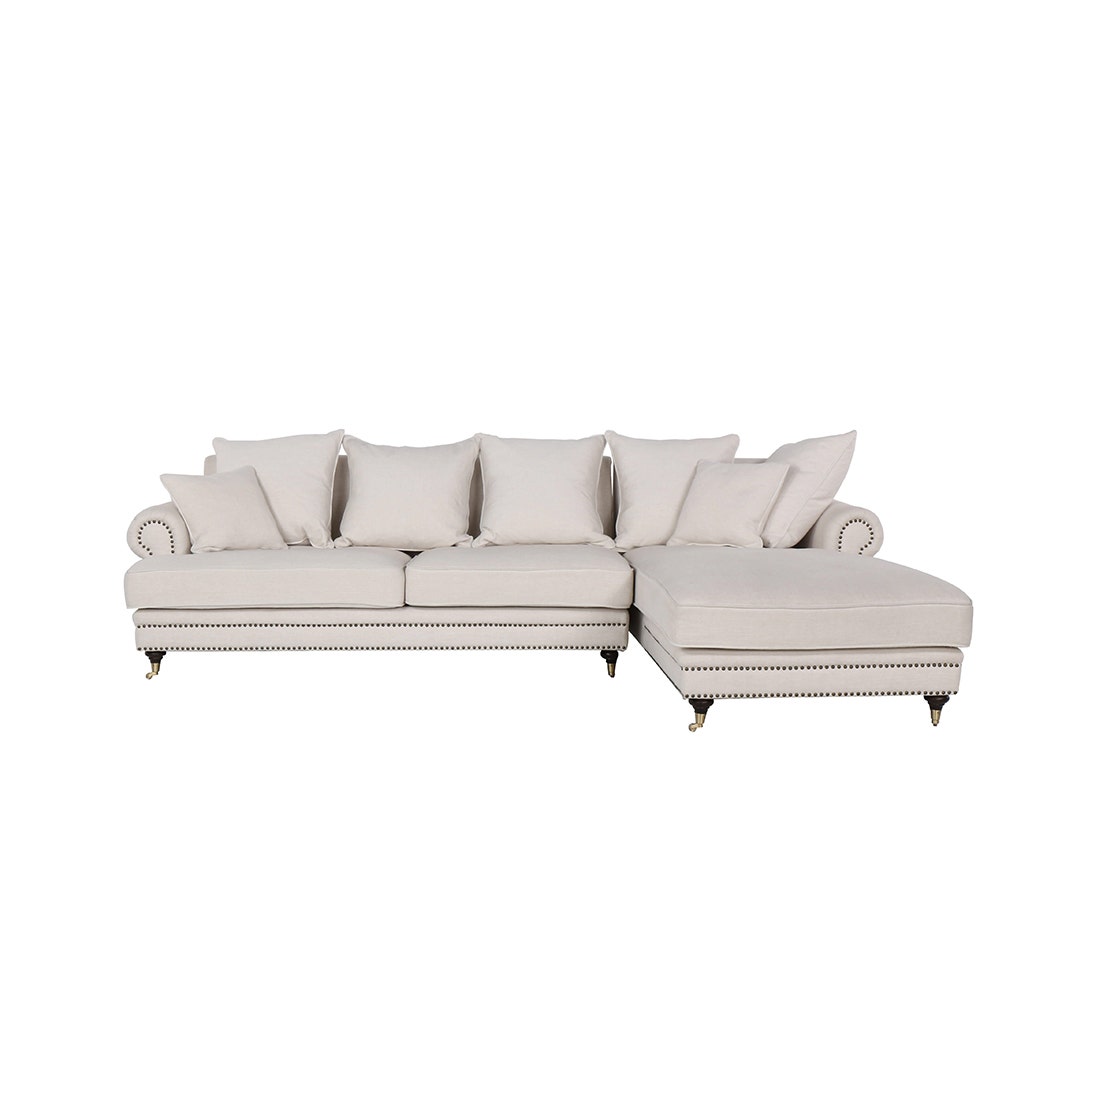 19078048-troden-furniture-sofa-recliner-corner-sofas-31